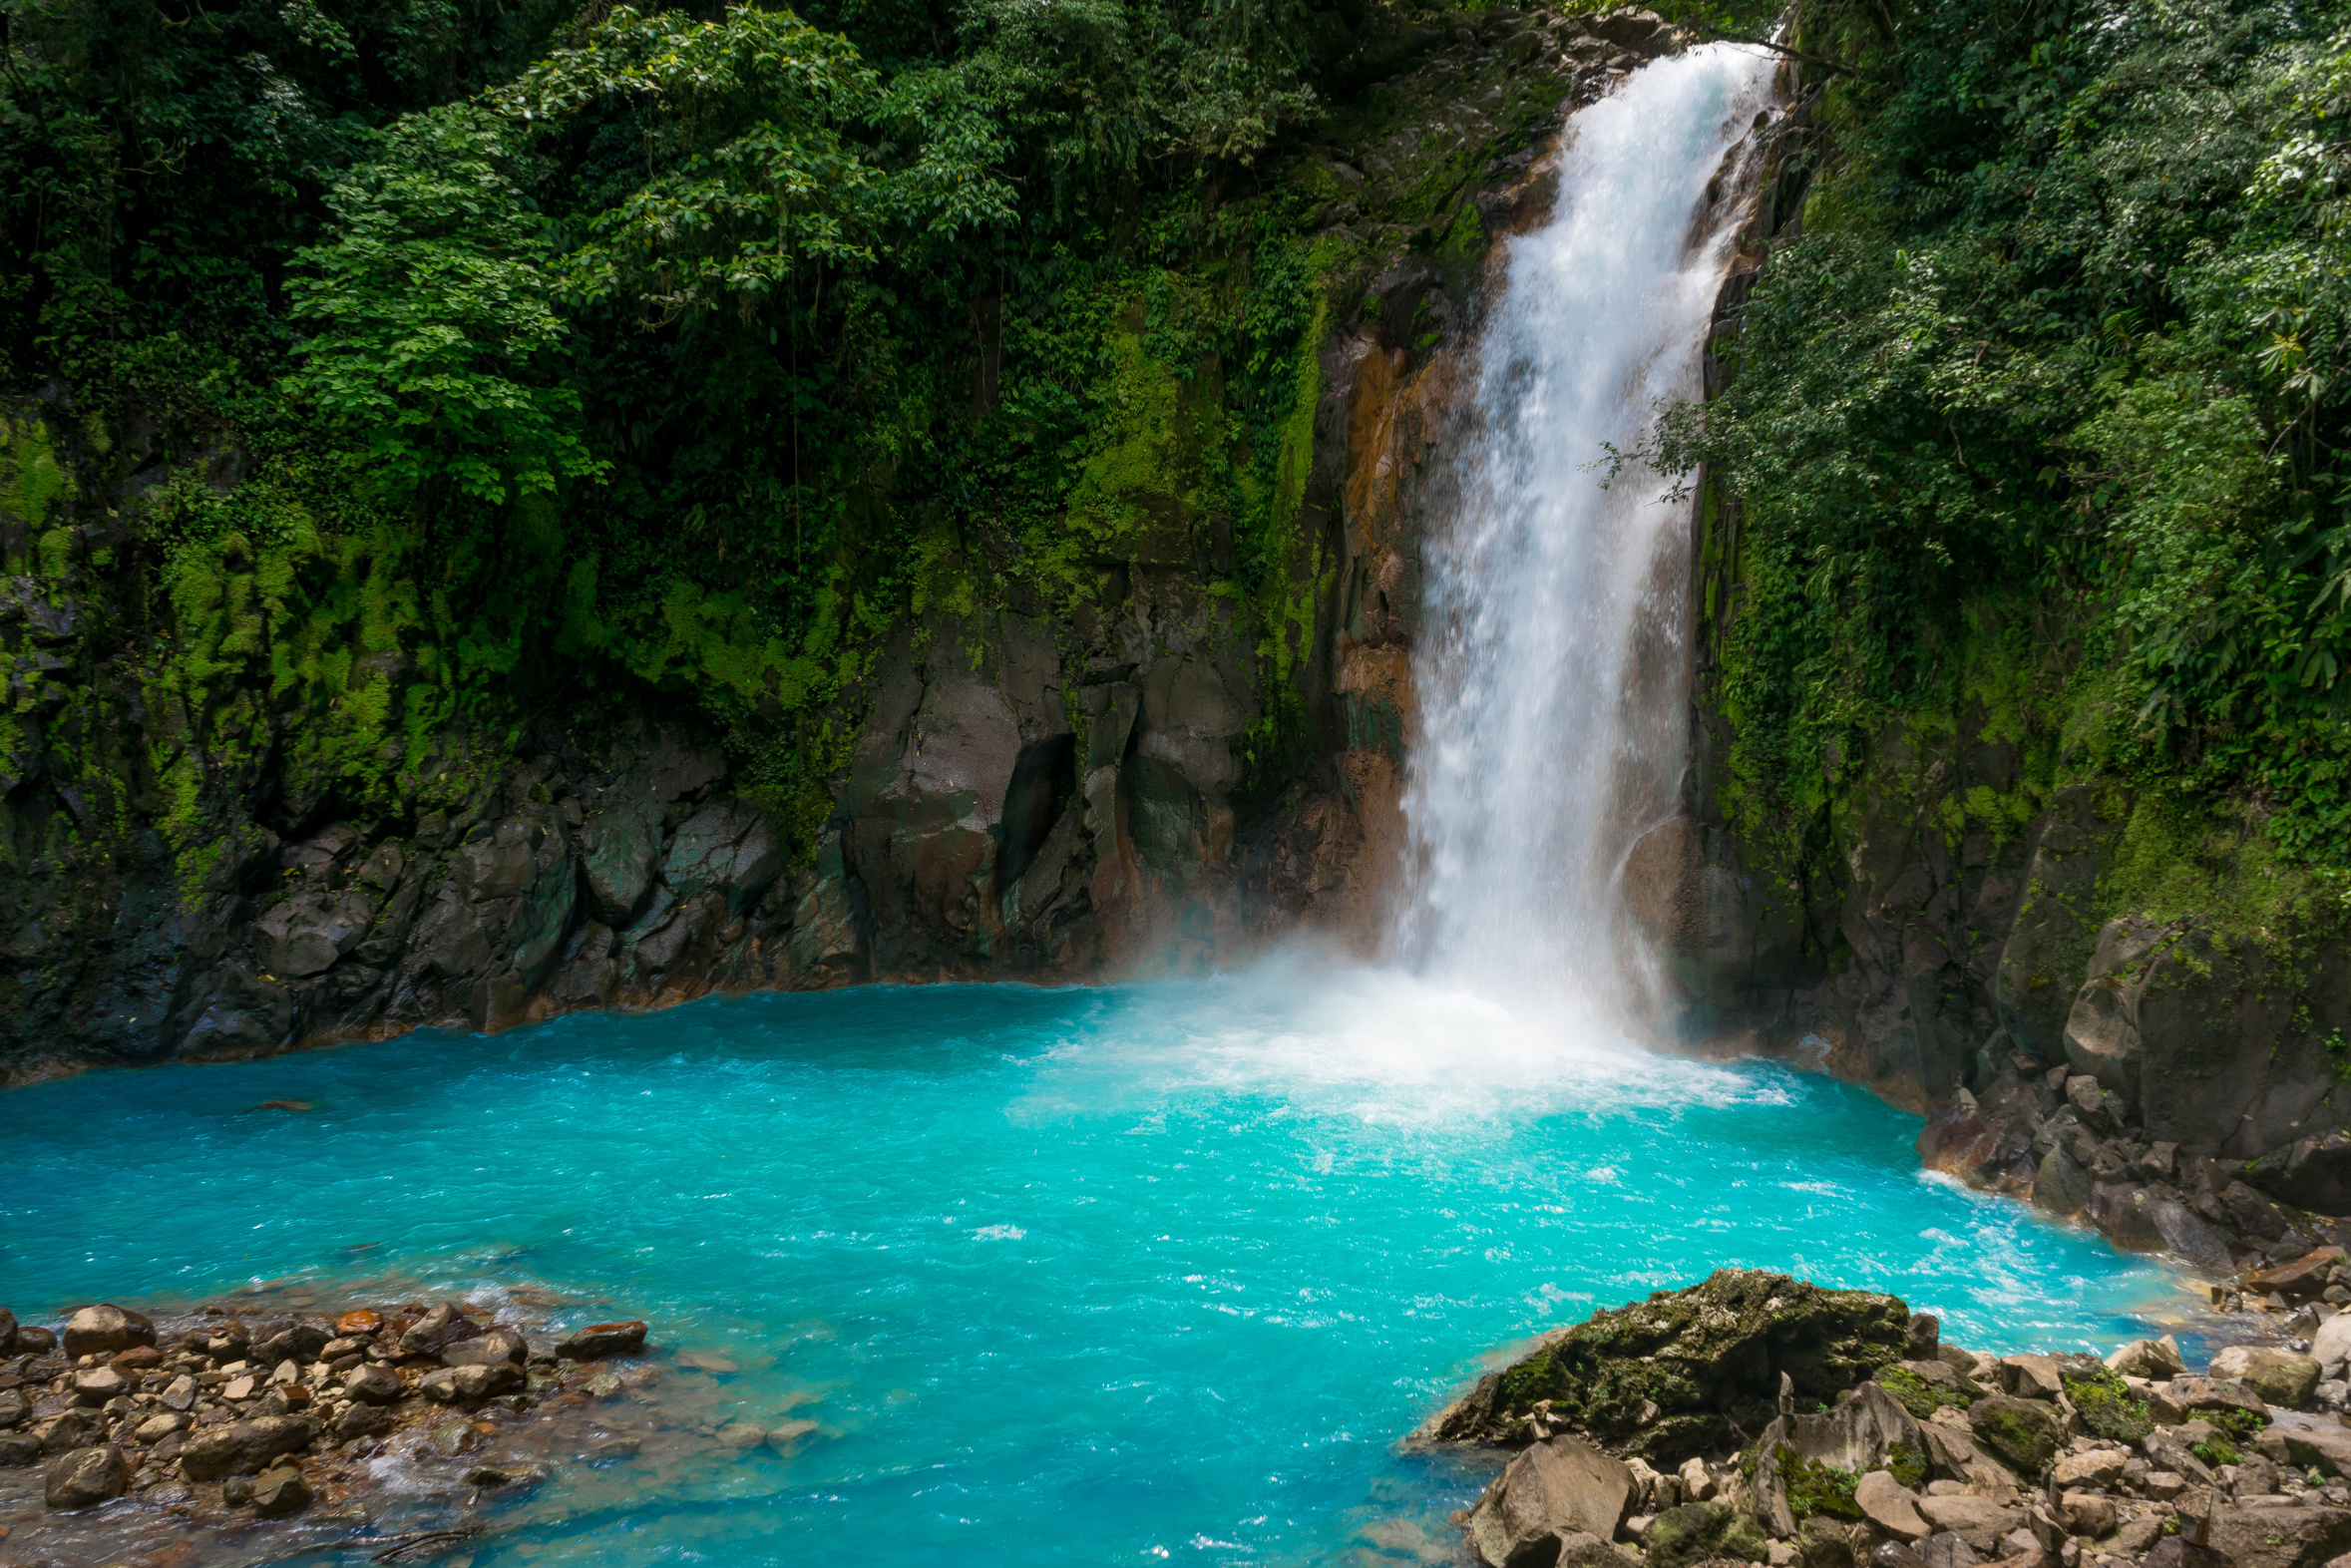 Rio Celeste Waterfall, Costa Rica